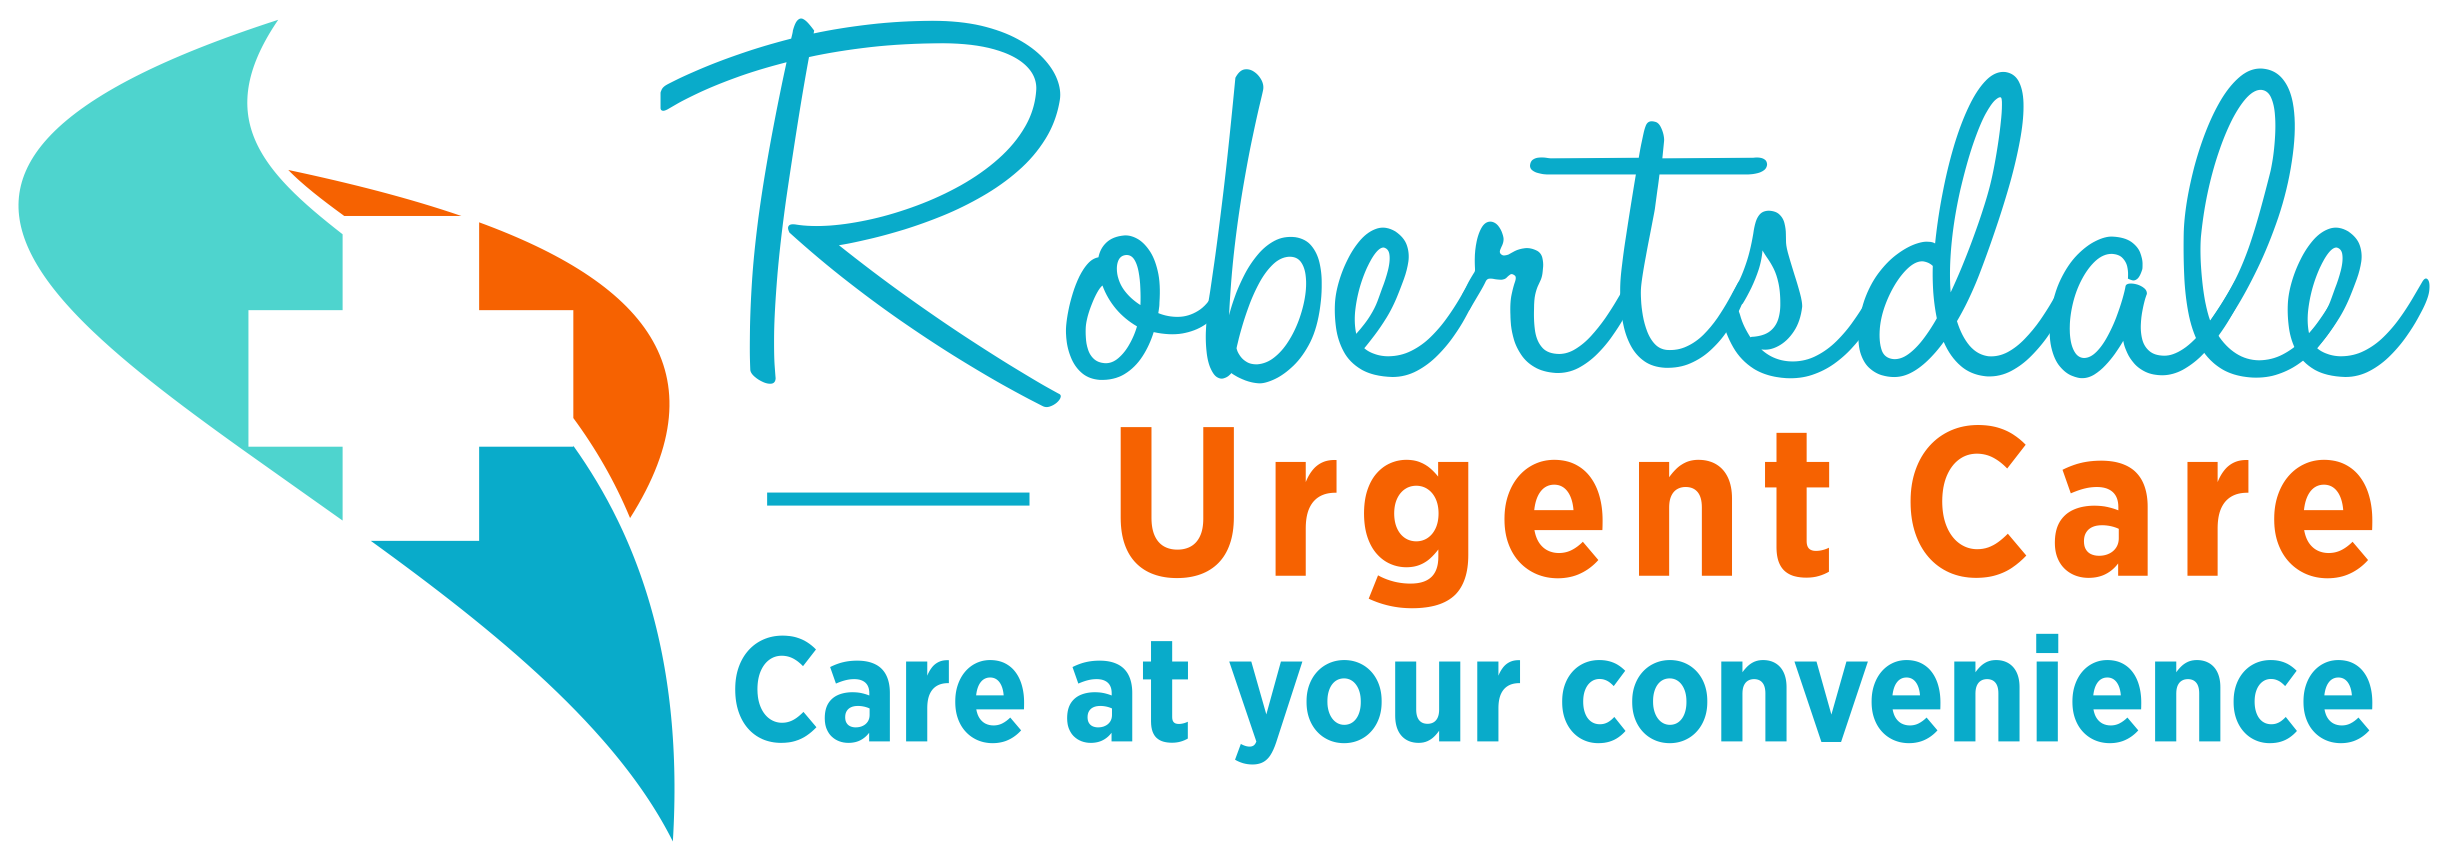 Robertsdale Urgent Care